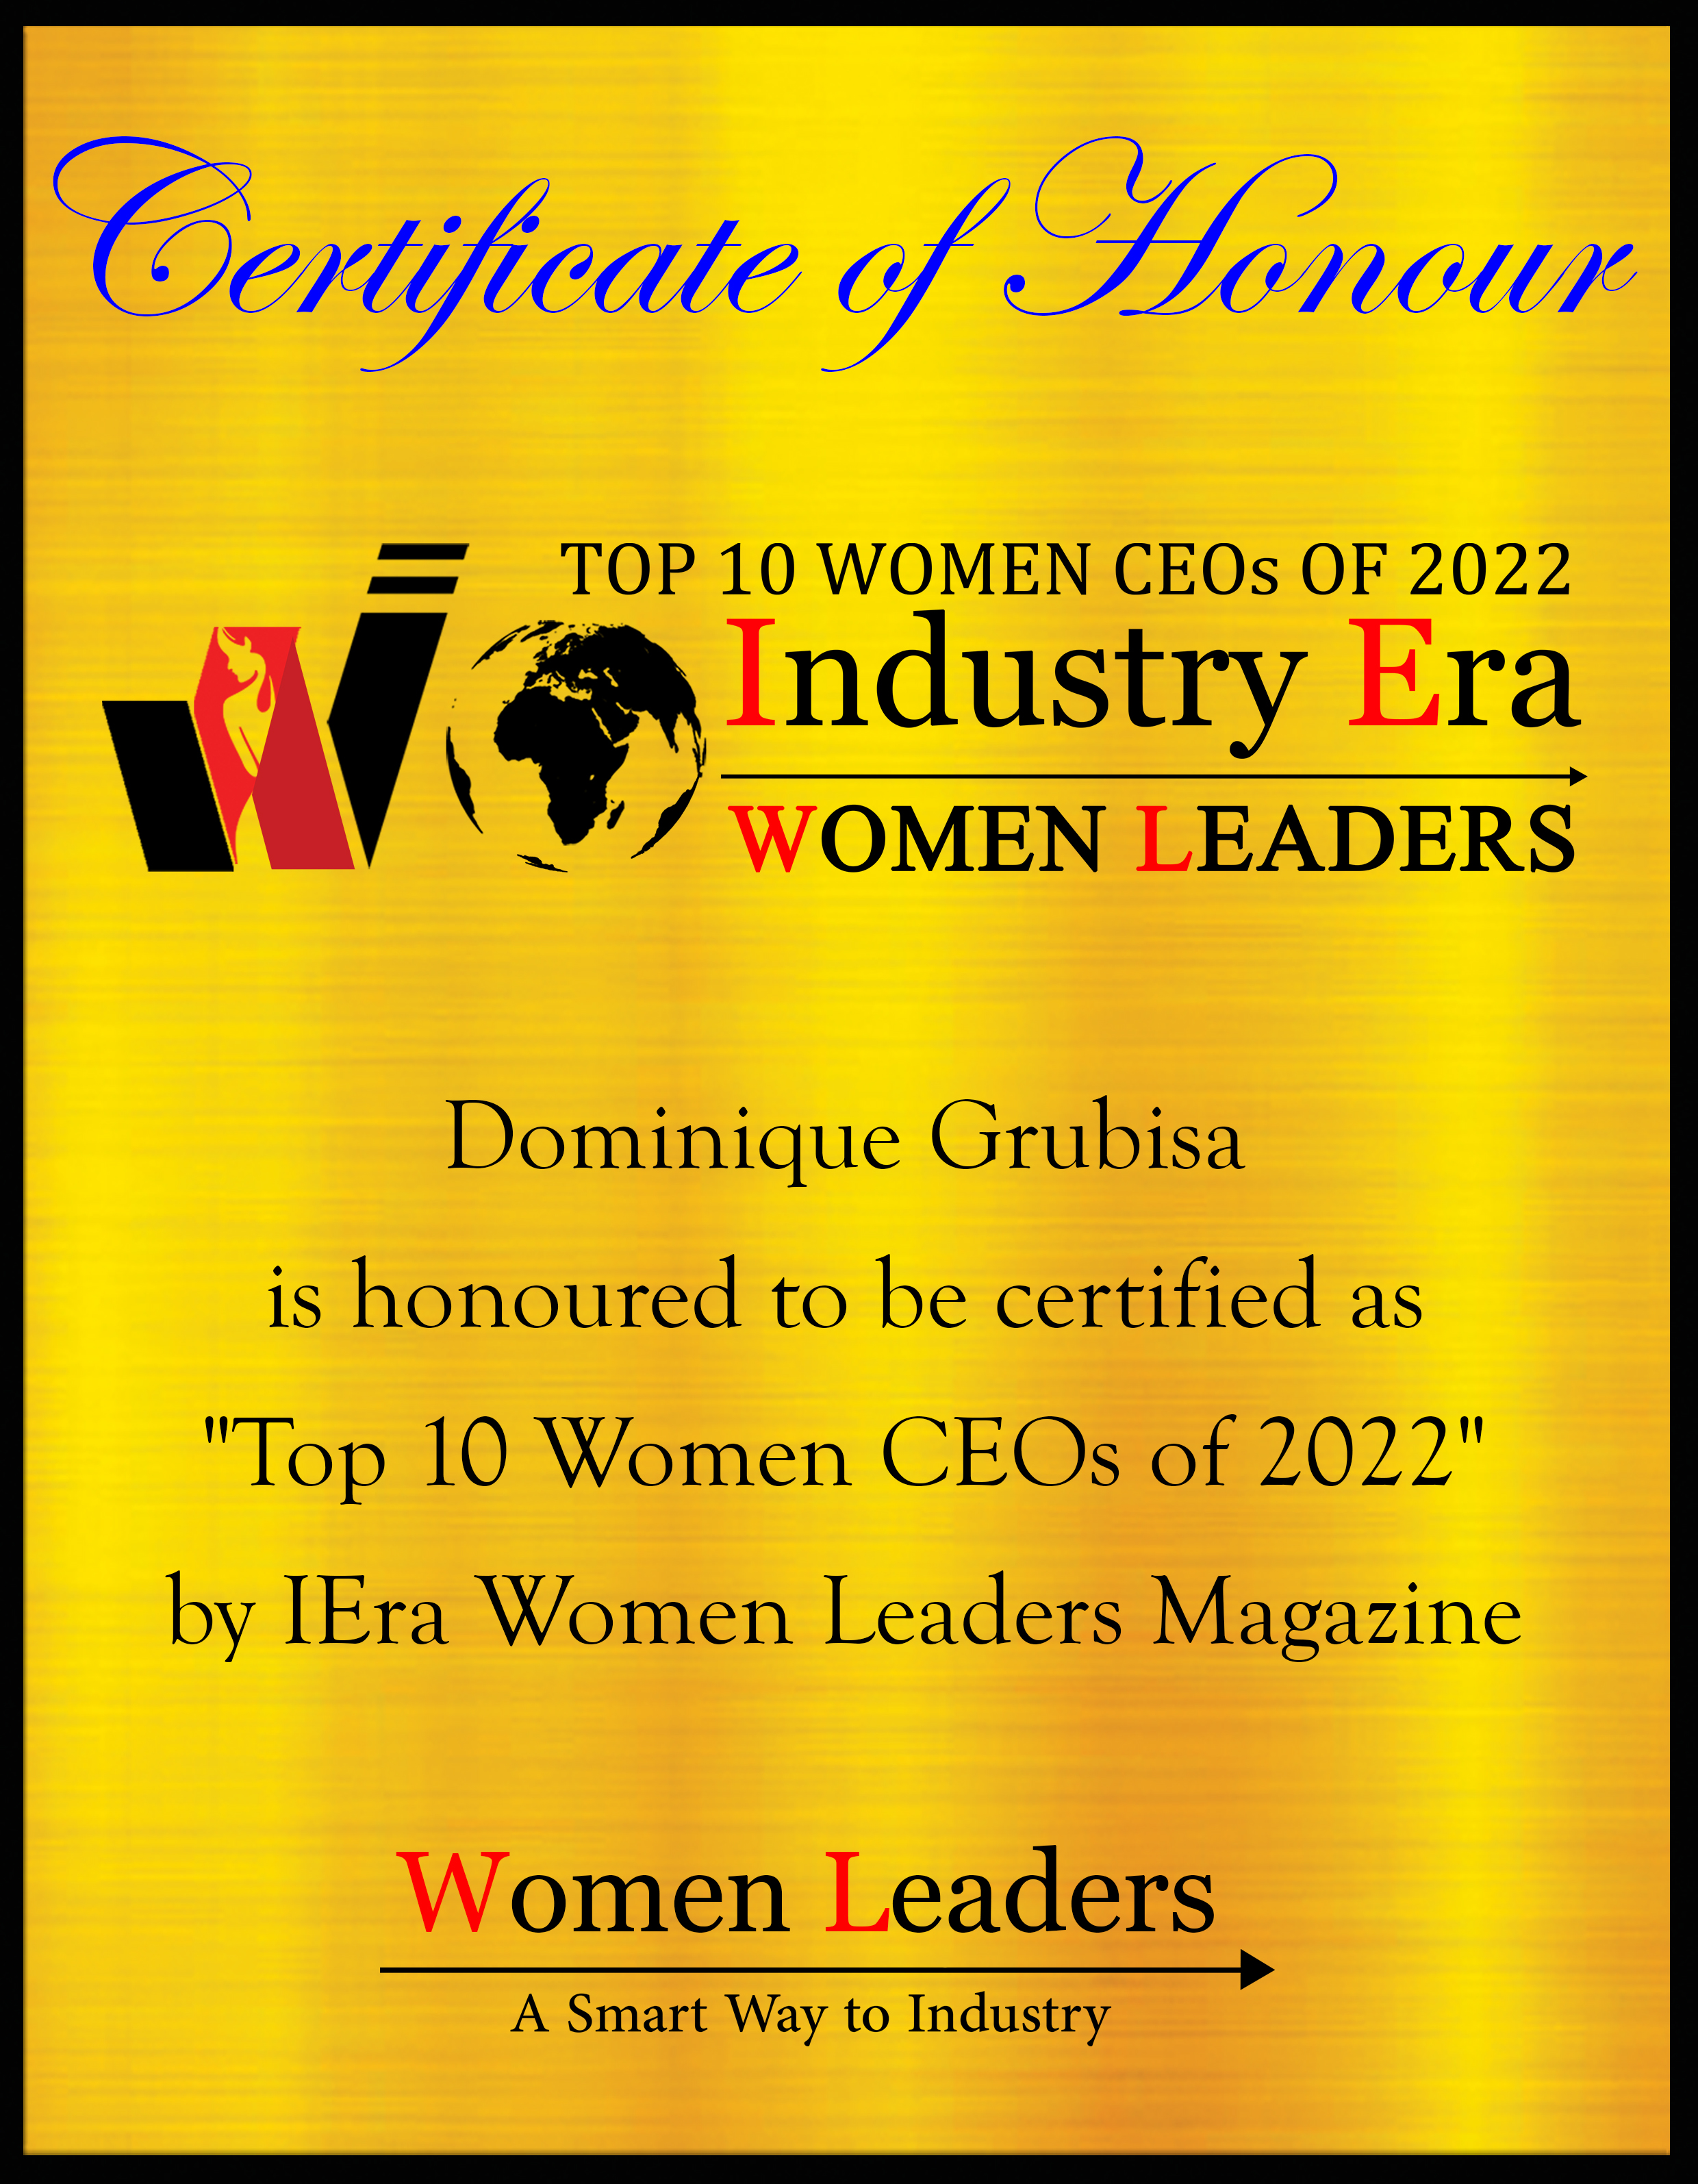 Dominique Grubisa, CEO & Founder of DG Institute, Top 10 Women CEOs of 2022